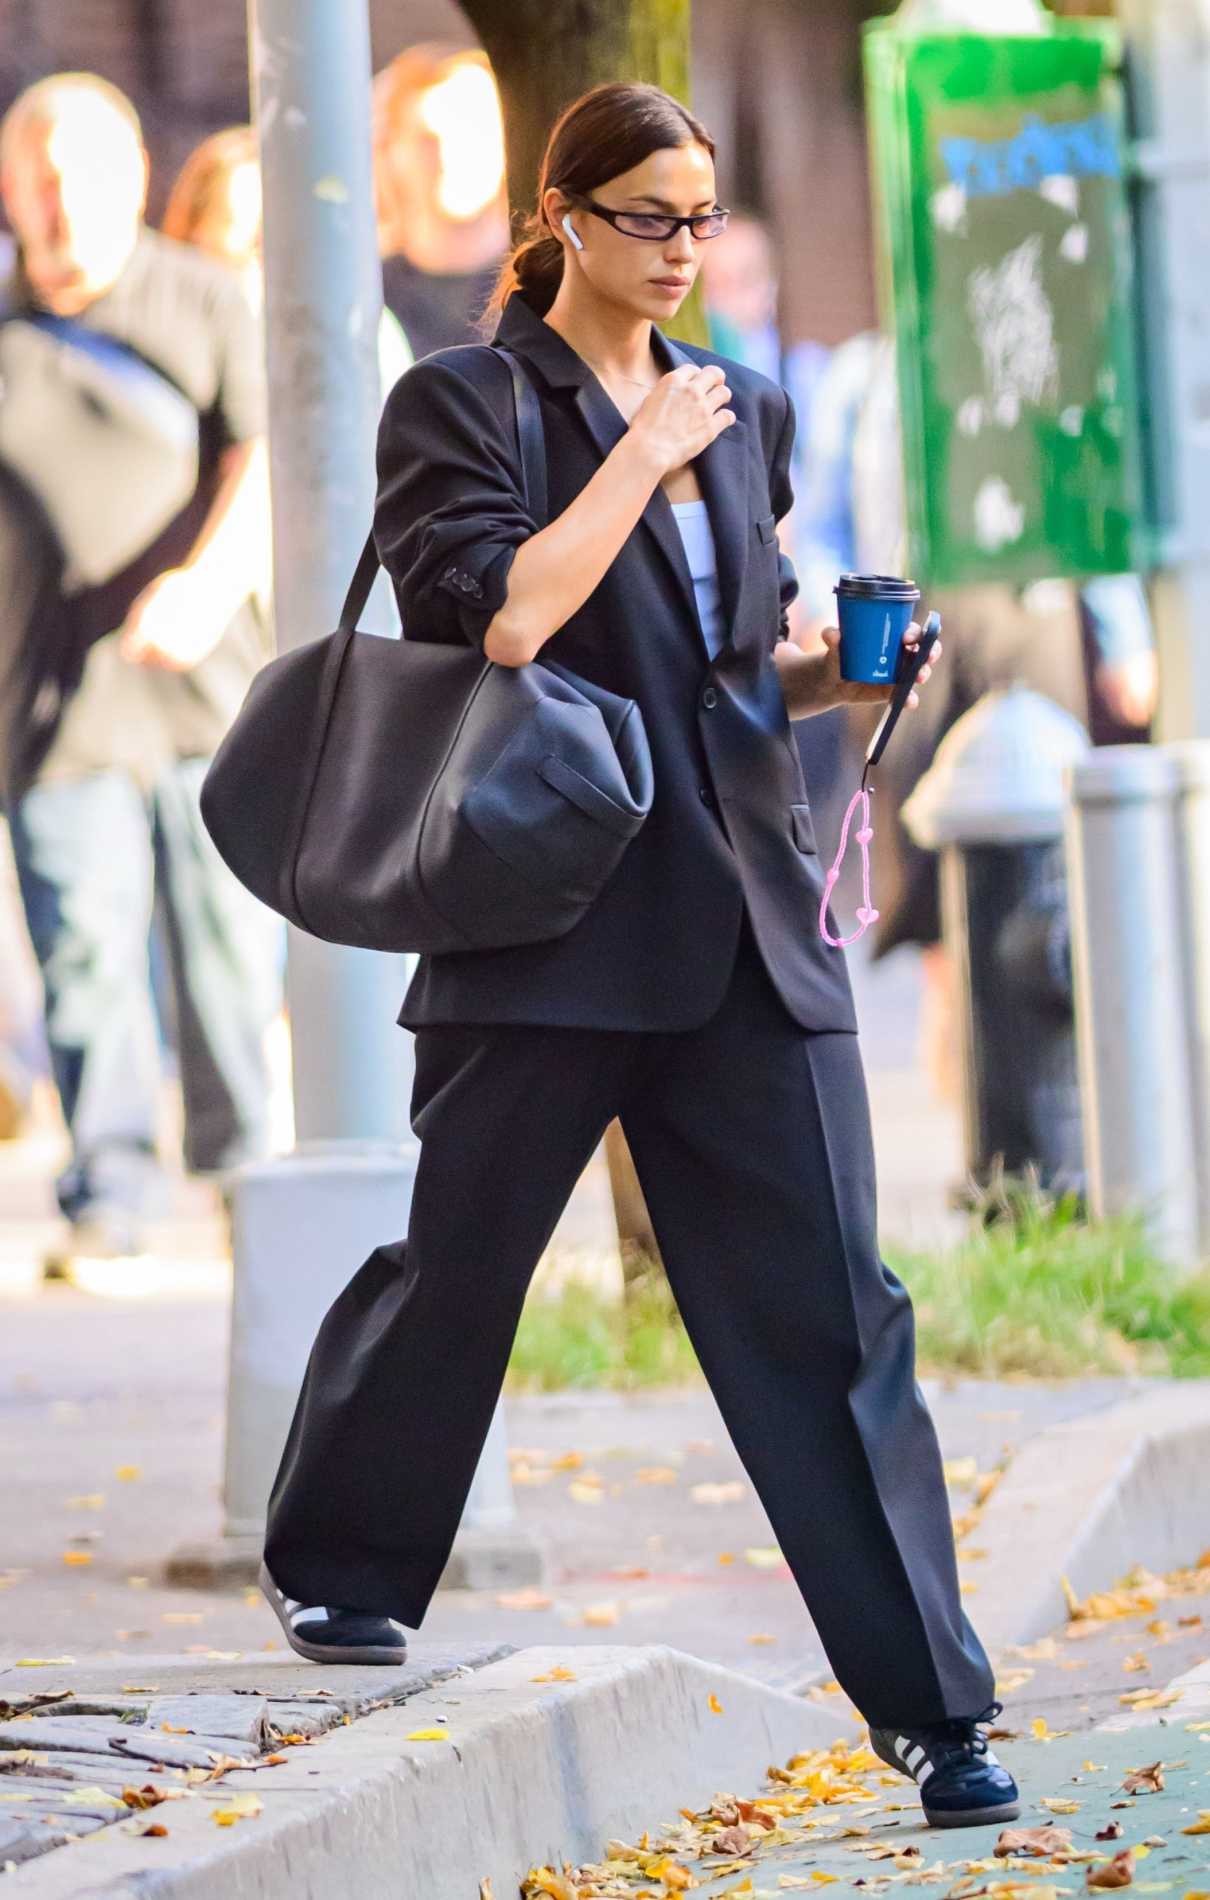 Irina Shayk in a Black Pantsuit